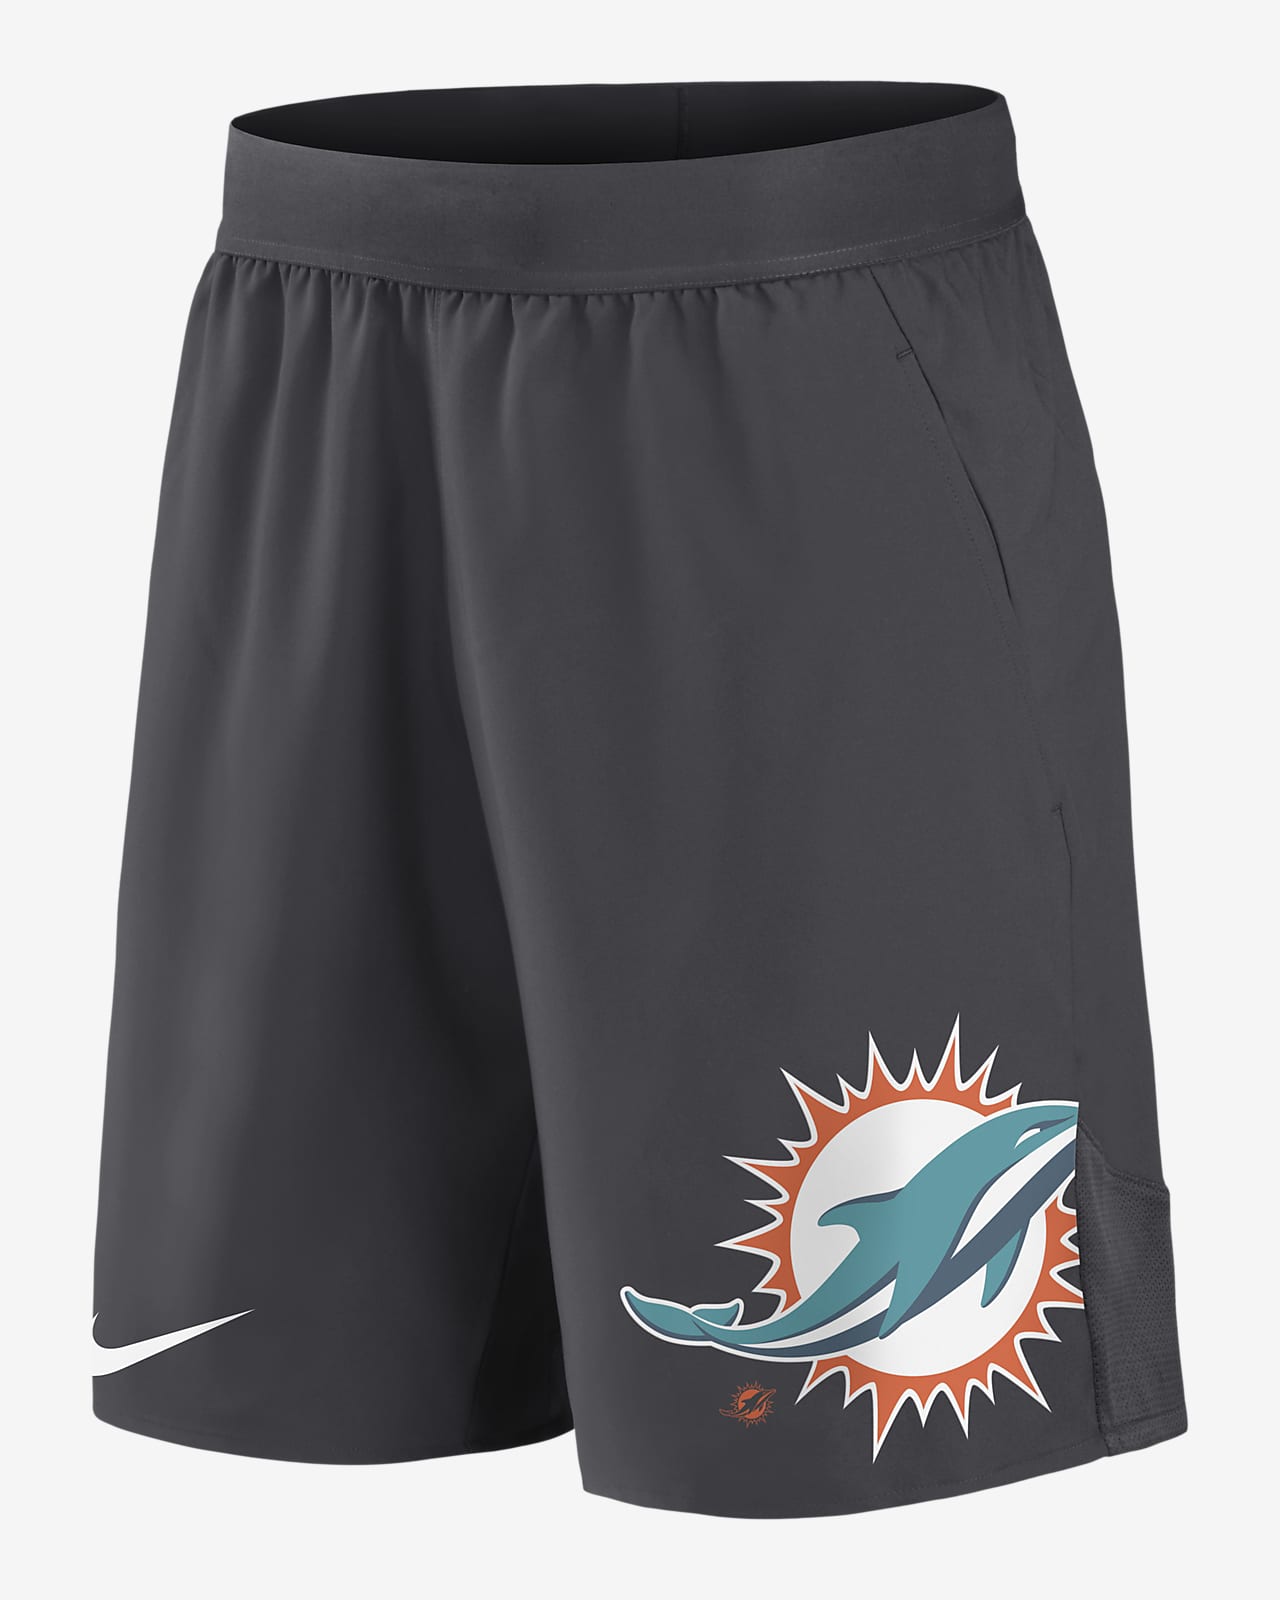 Nike Dri-FIT Stretch (NFL Miami Dolphins) Men's Shorts.